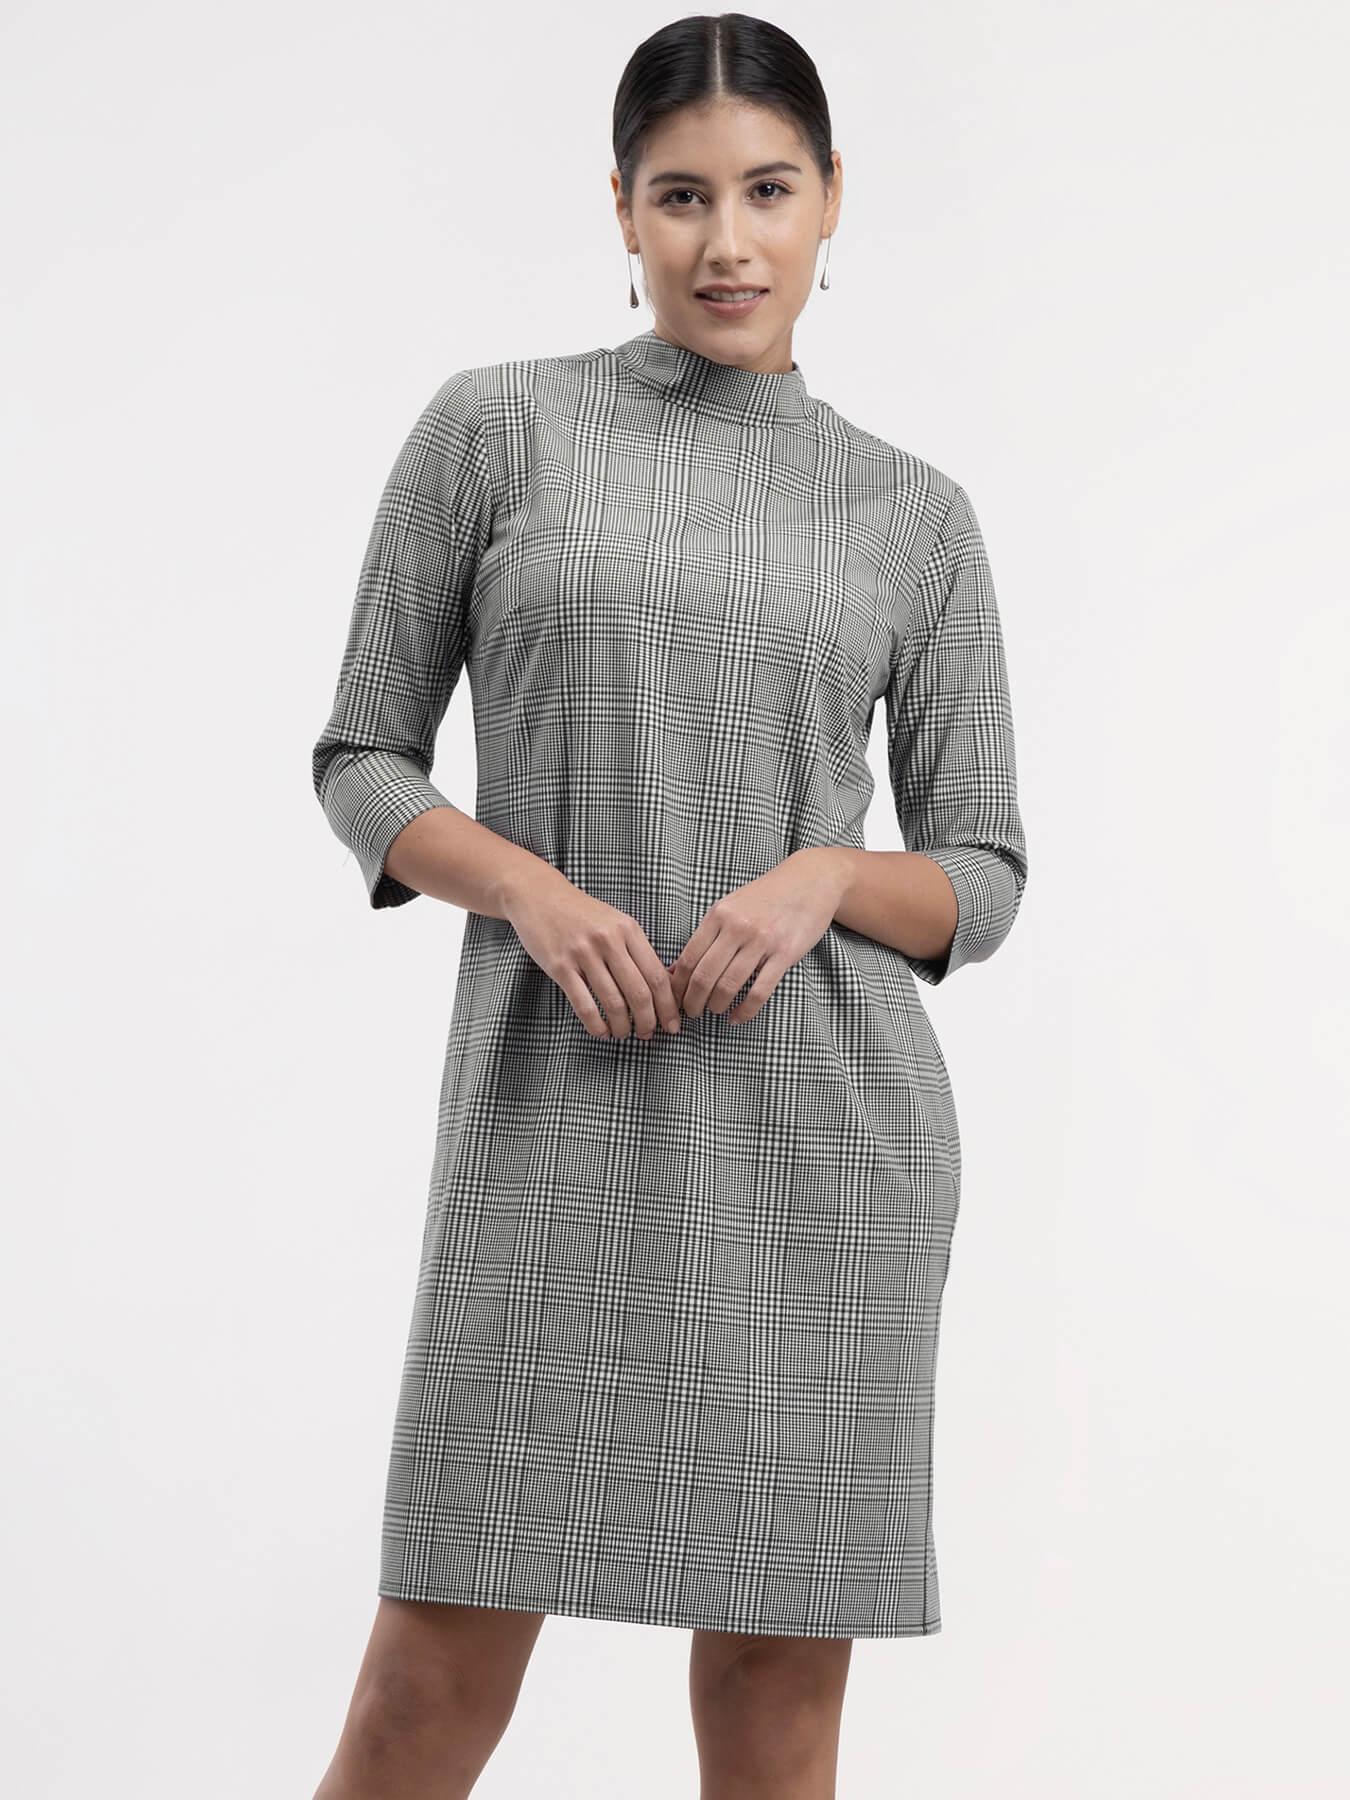 Cotton Checkered Shift Dress - Black and White| Formal Dresses